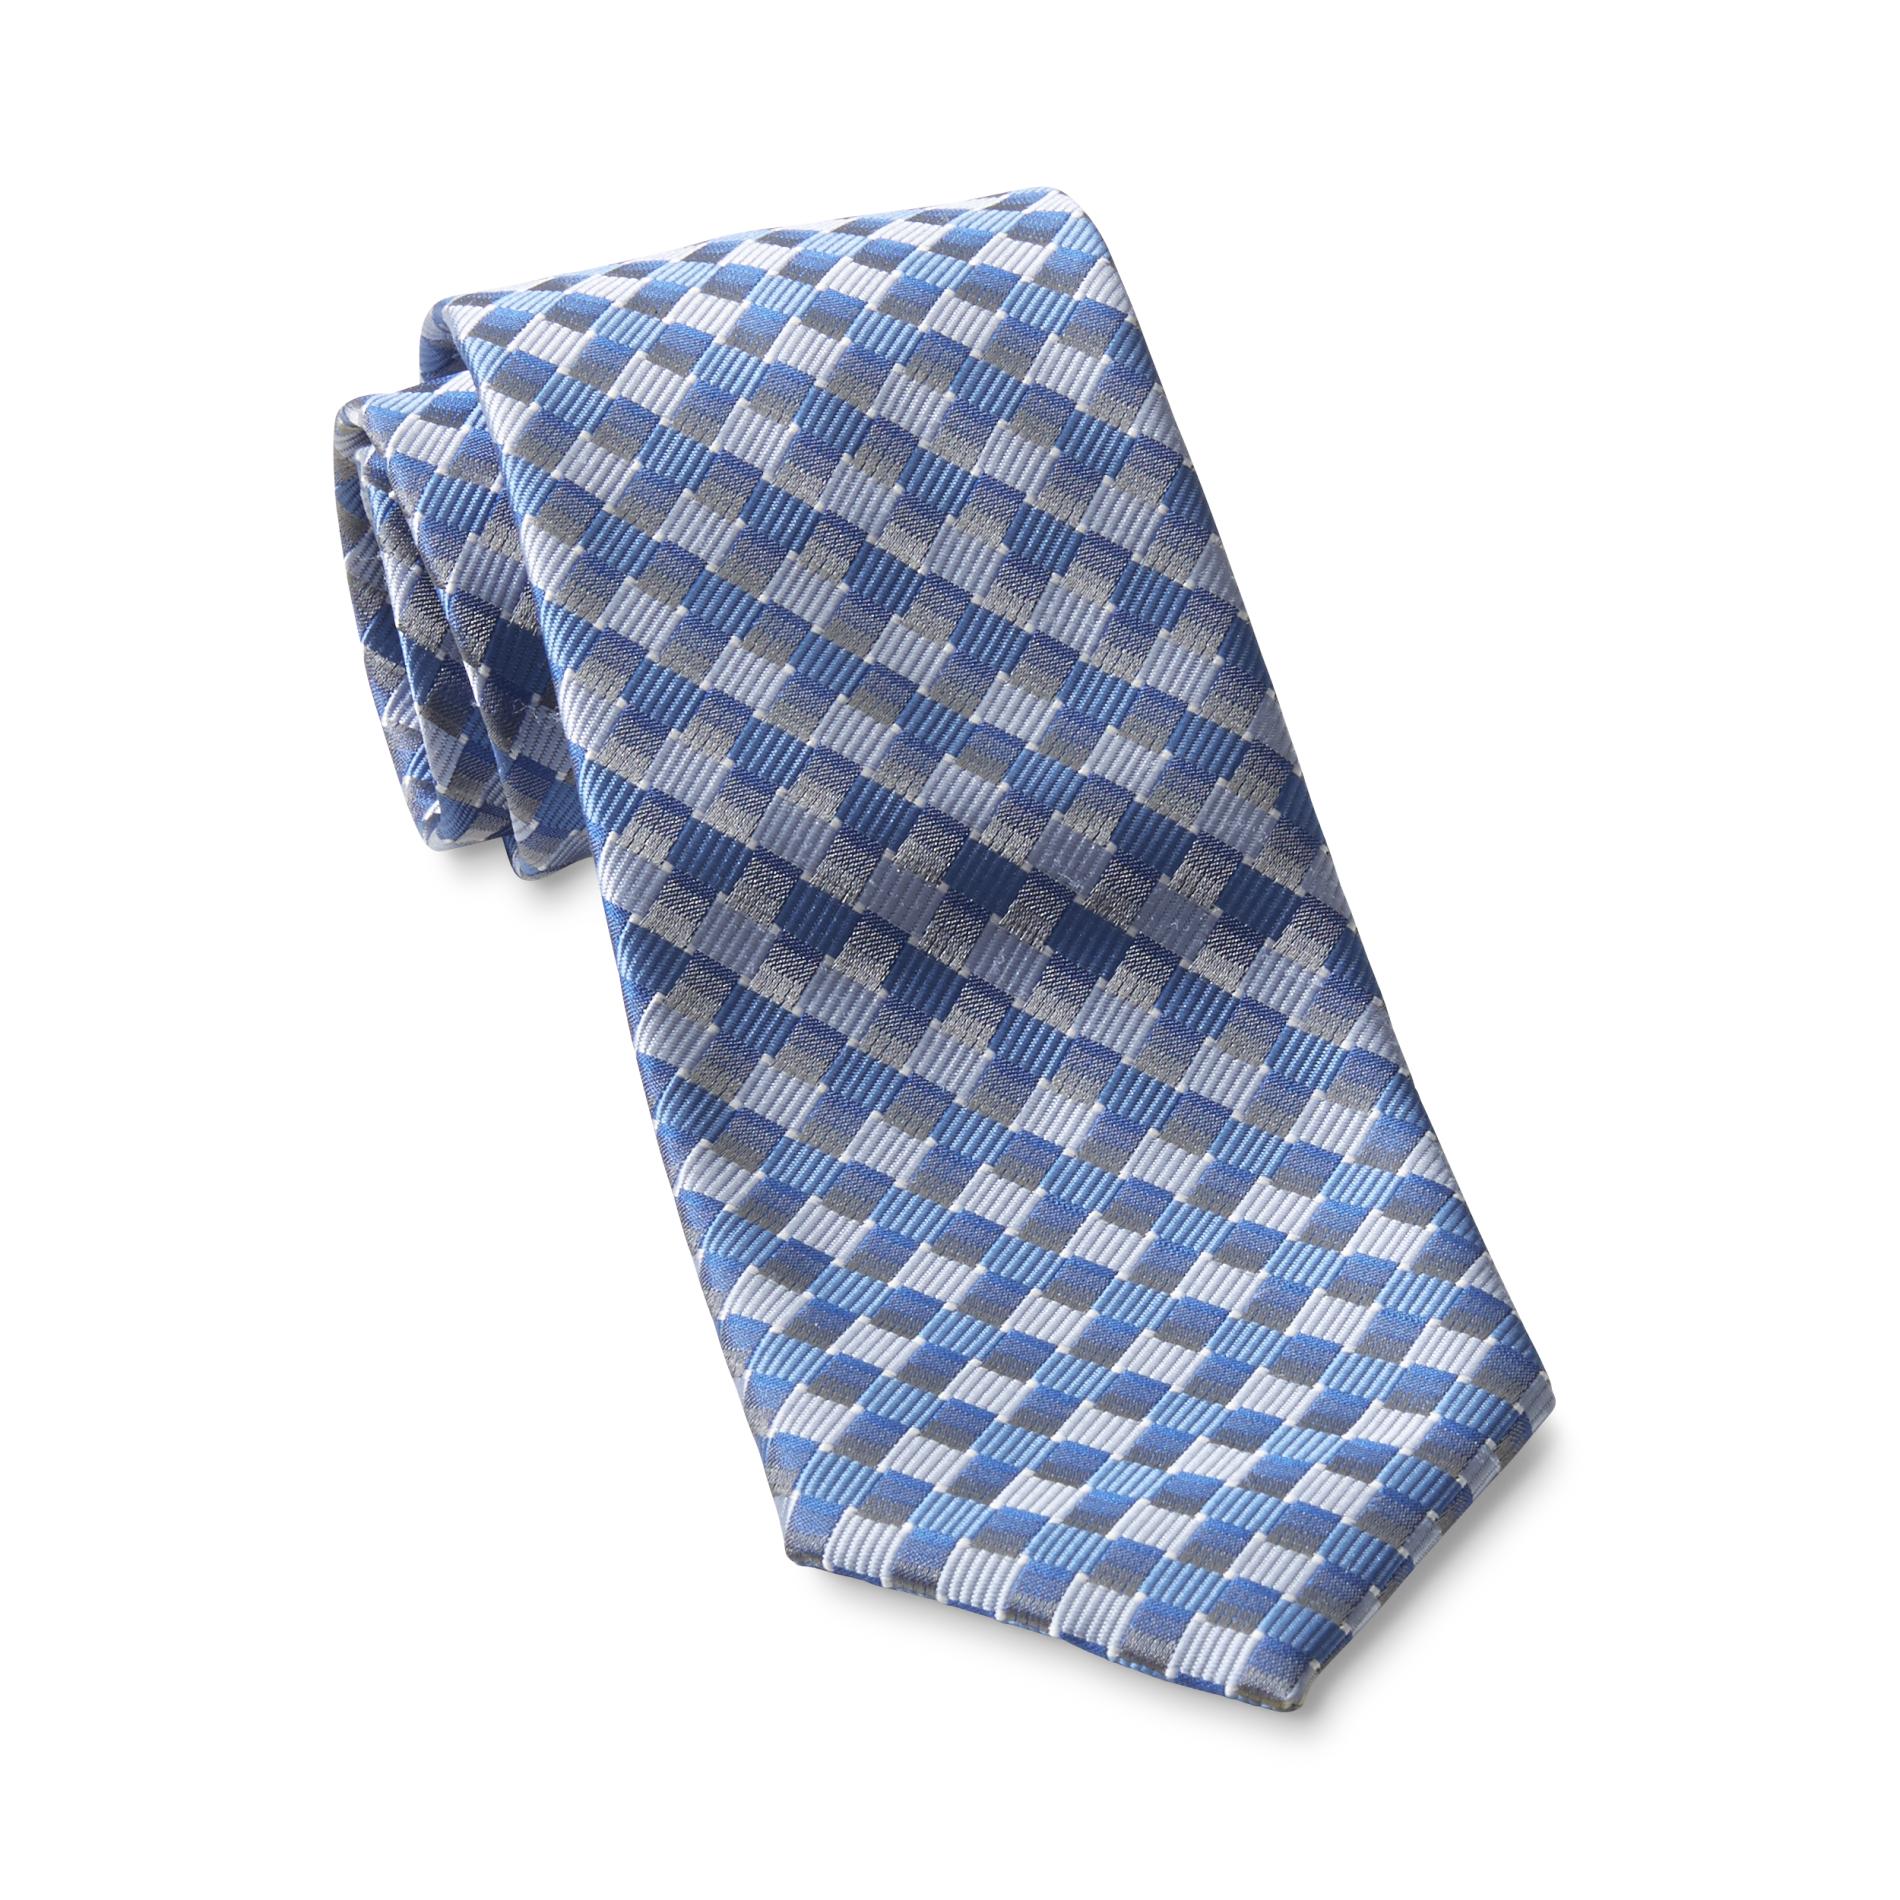 Arrow Men's Necktie - Geometric